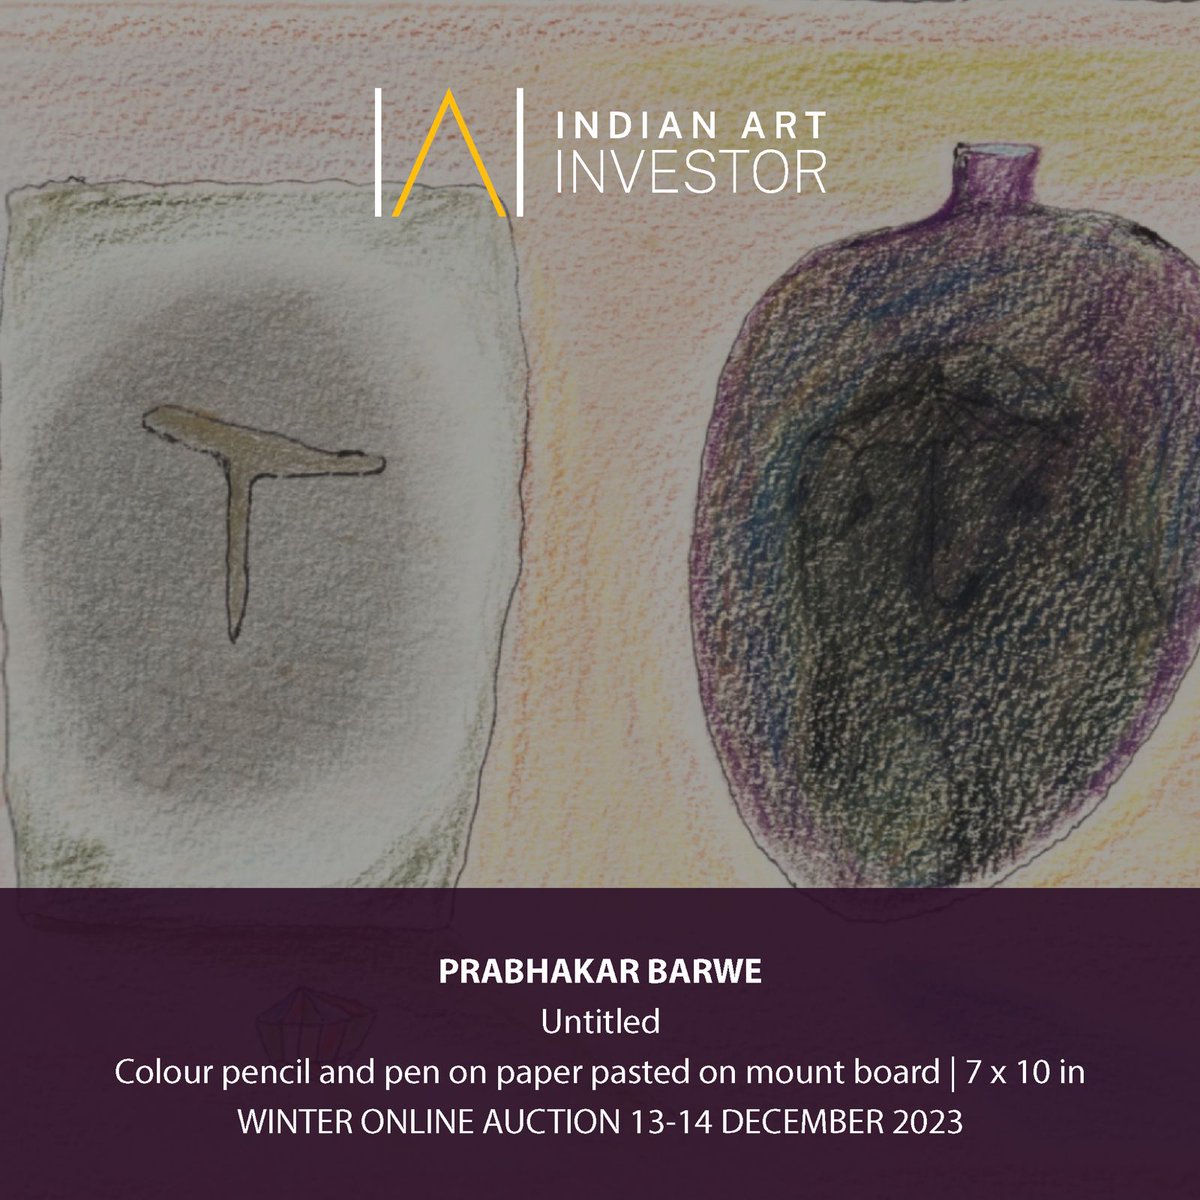 Modernists clocked the second highest average price in Q3FY24 at ₹41.3 lakhs ($49.6 K).
.
#indianartmarket #investment #artadvisory #artworld #artinvestor #investmentplanning #investmentopportunity #affordableart #affordableinvestment